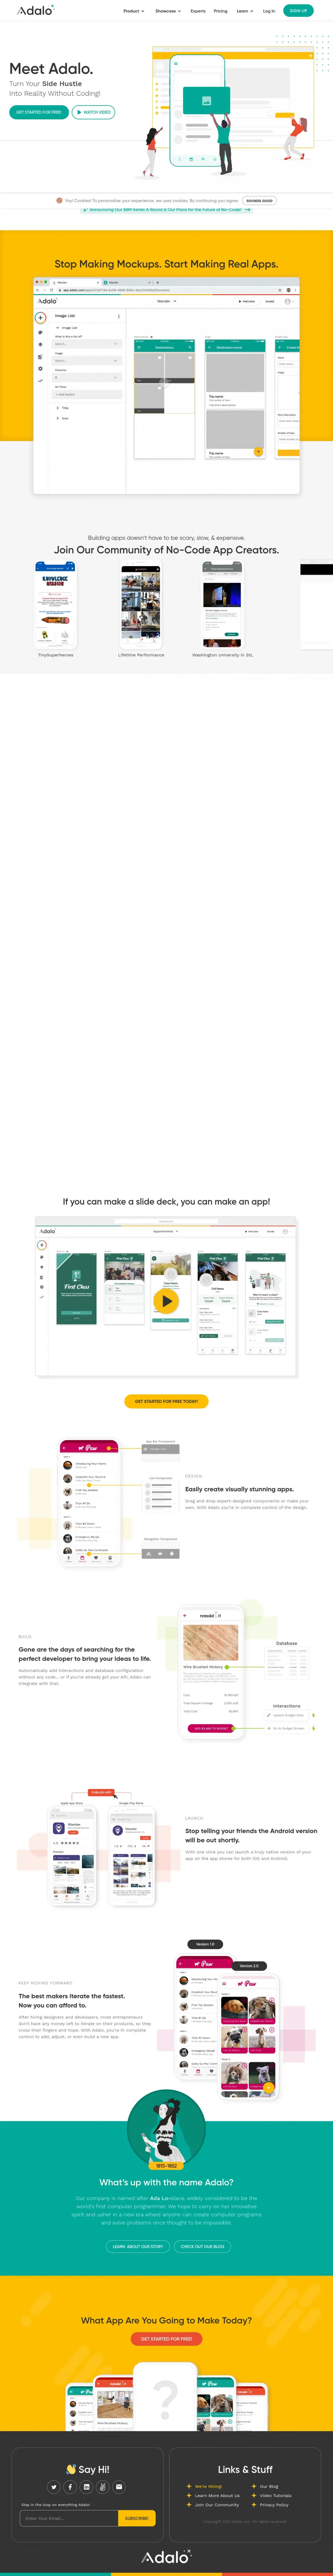 Screenshot of Adalo.com website as example of nice and clean design